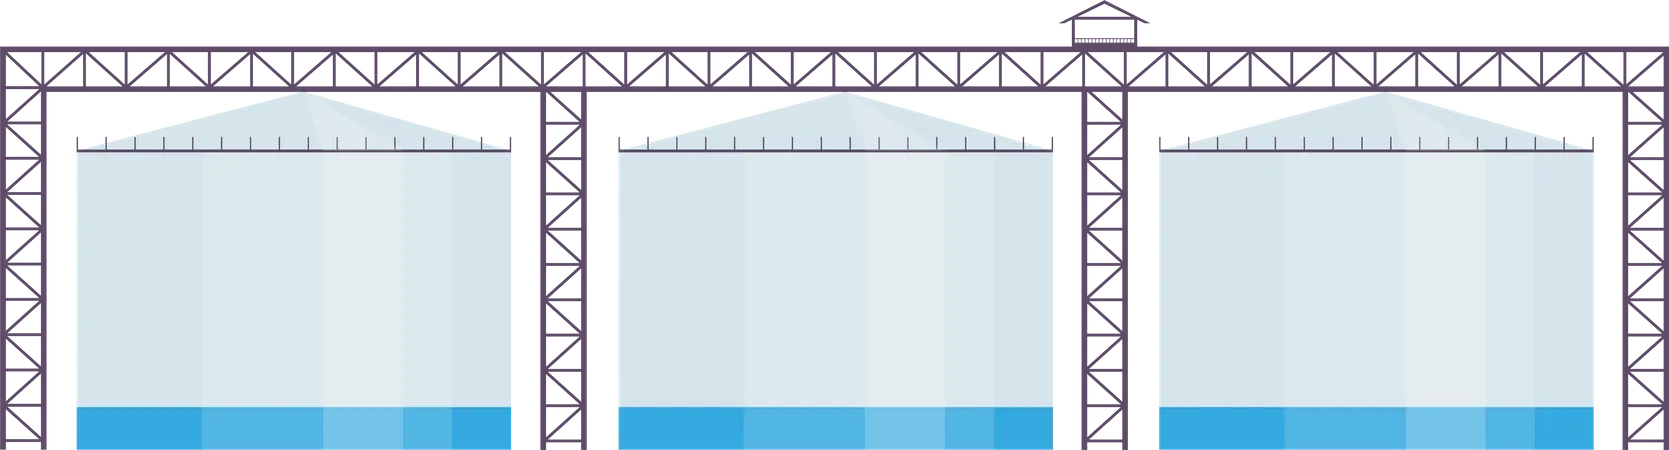 Industrial reservoirs  Illustration